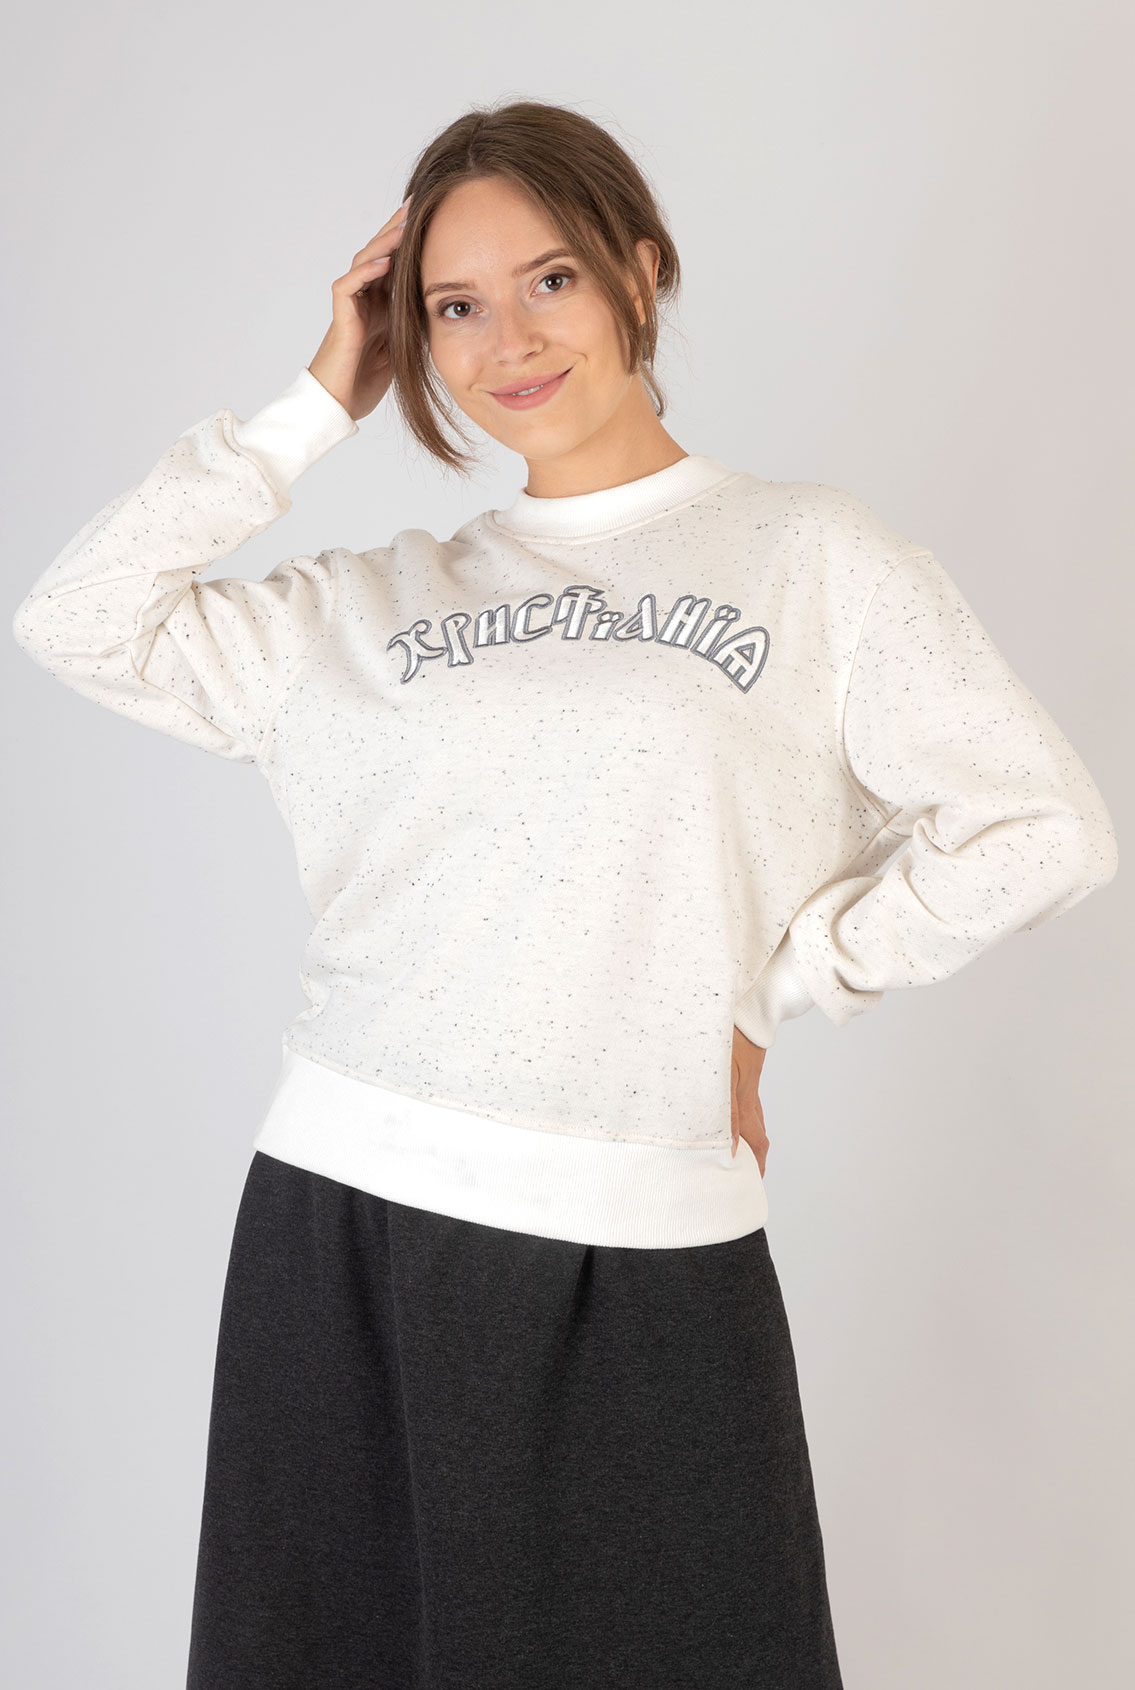 women's sweatshirt with embroidery